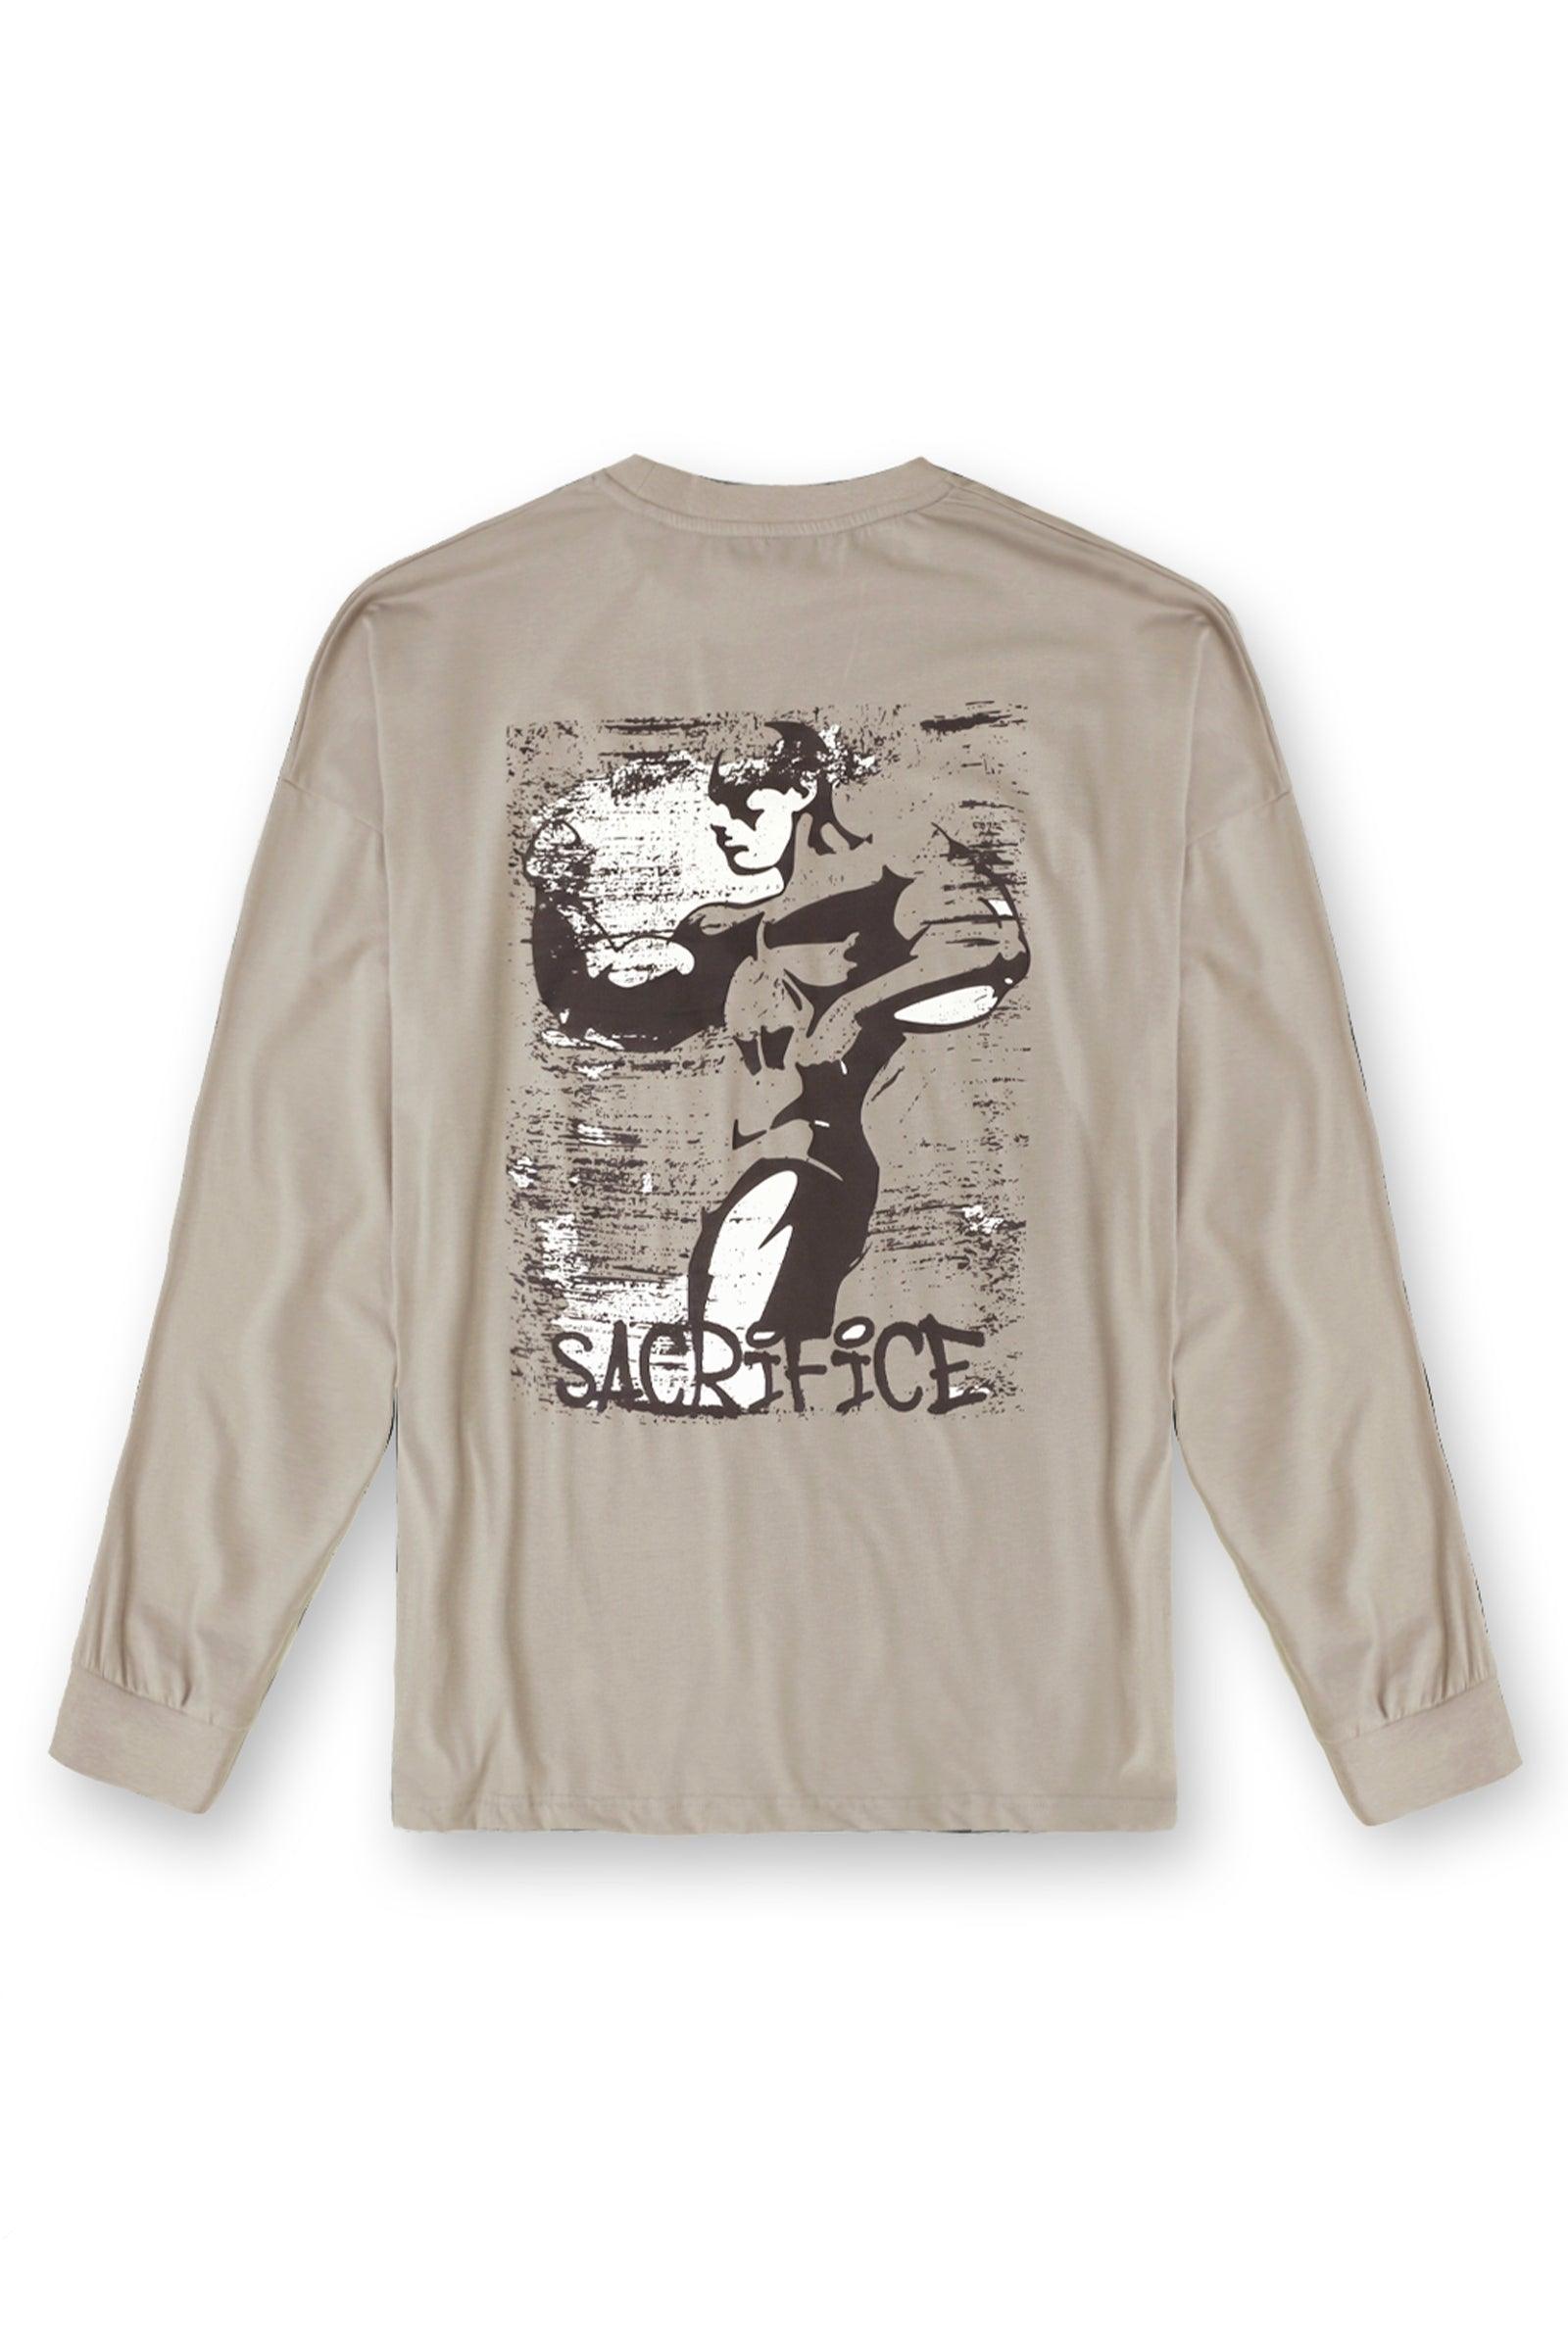 Energy Oversized Long Sleeve T-Shirt - Sacrifice Gray - Jed North